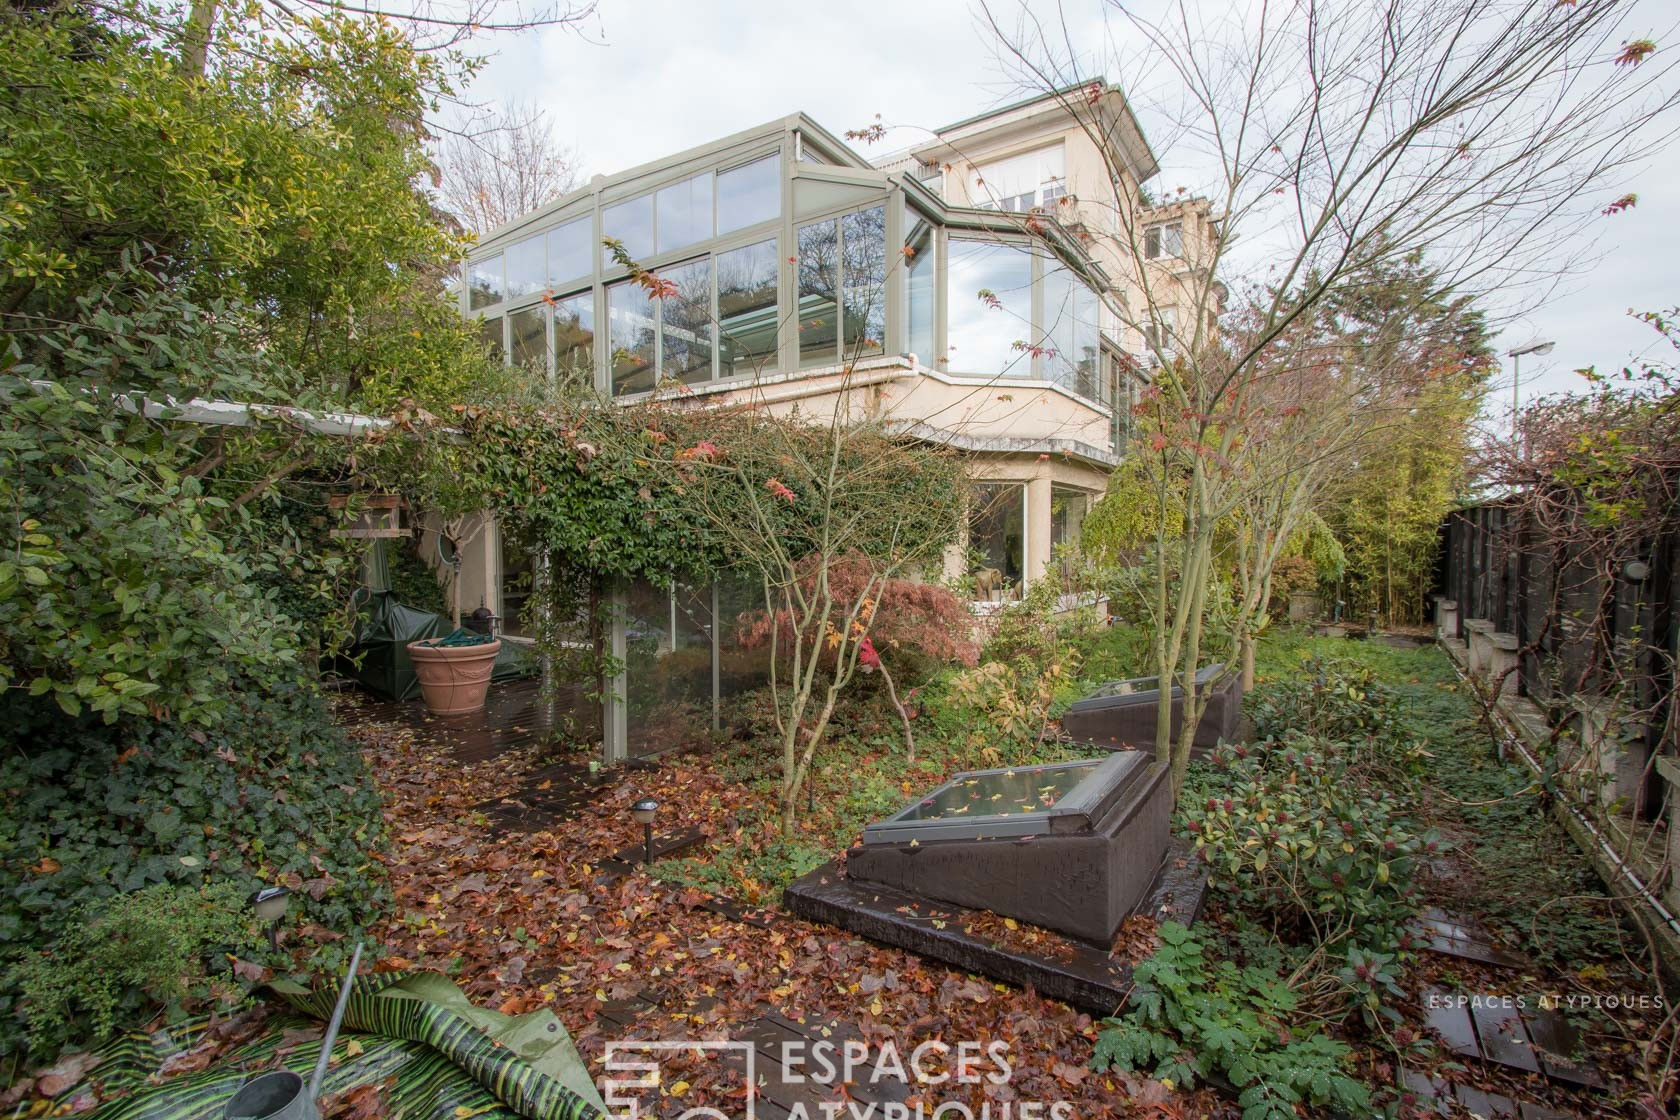 House spirit duplex with terrace and garden